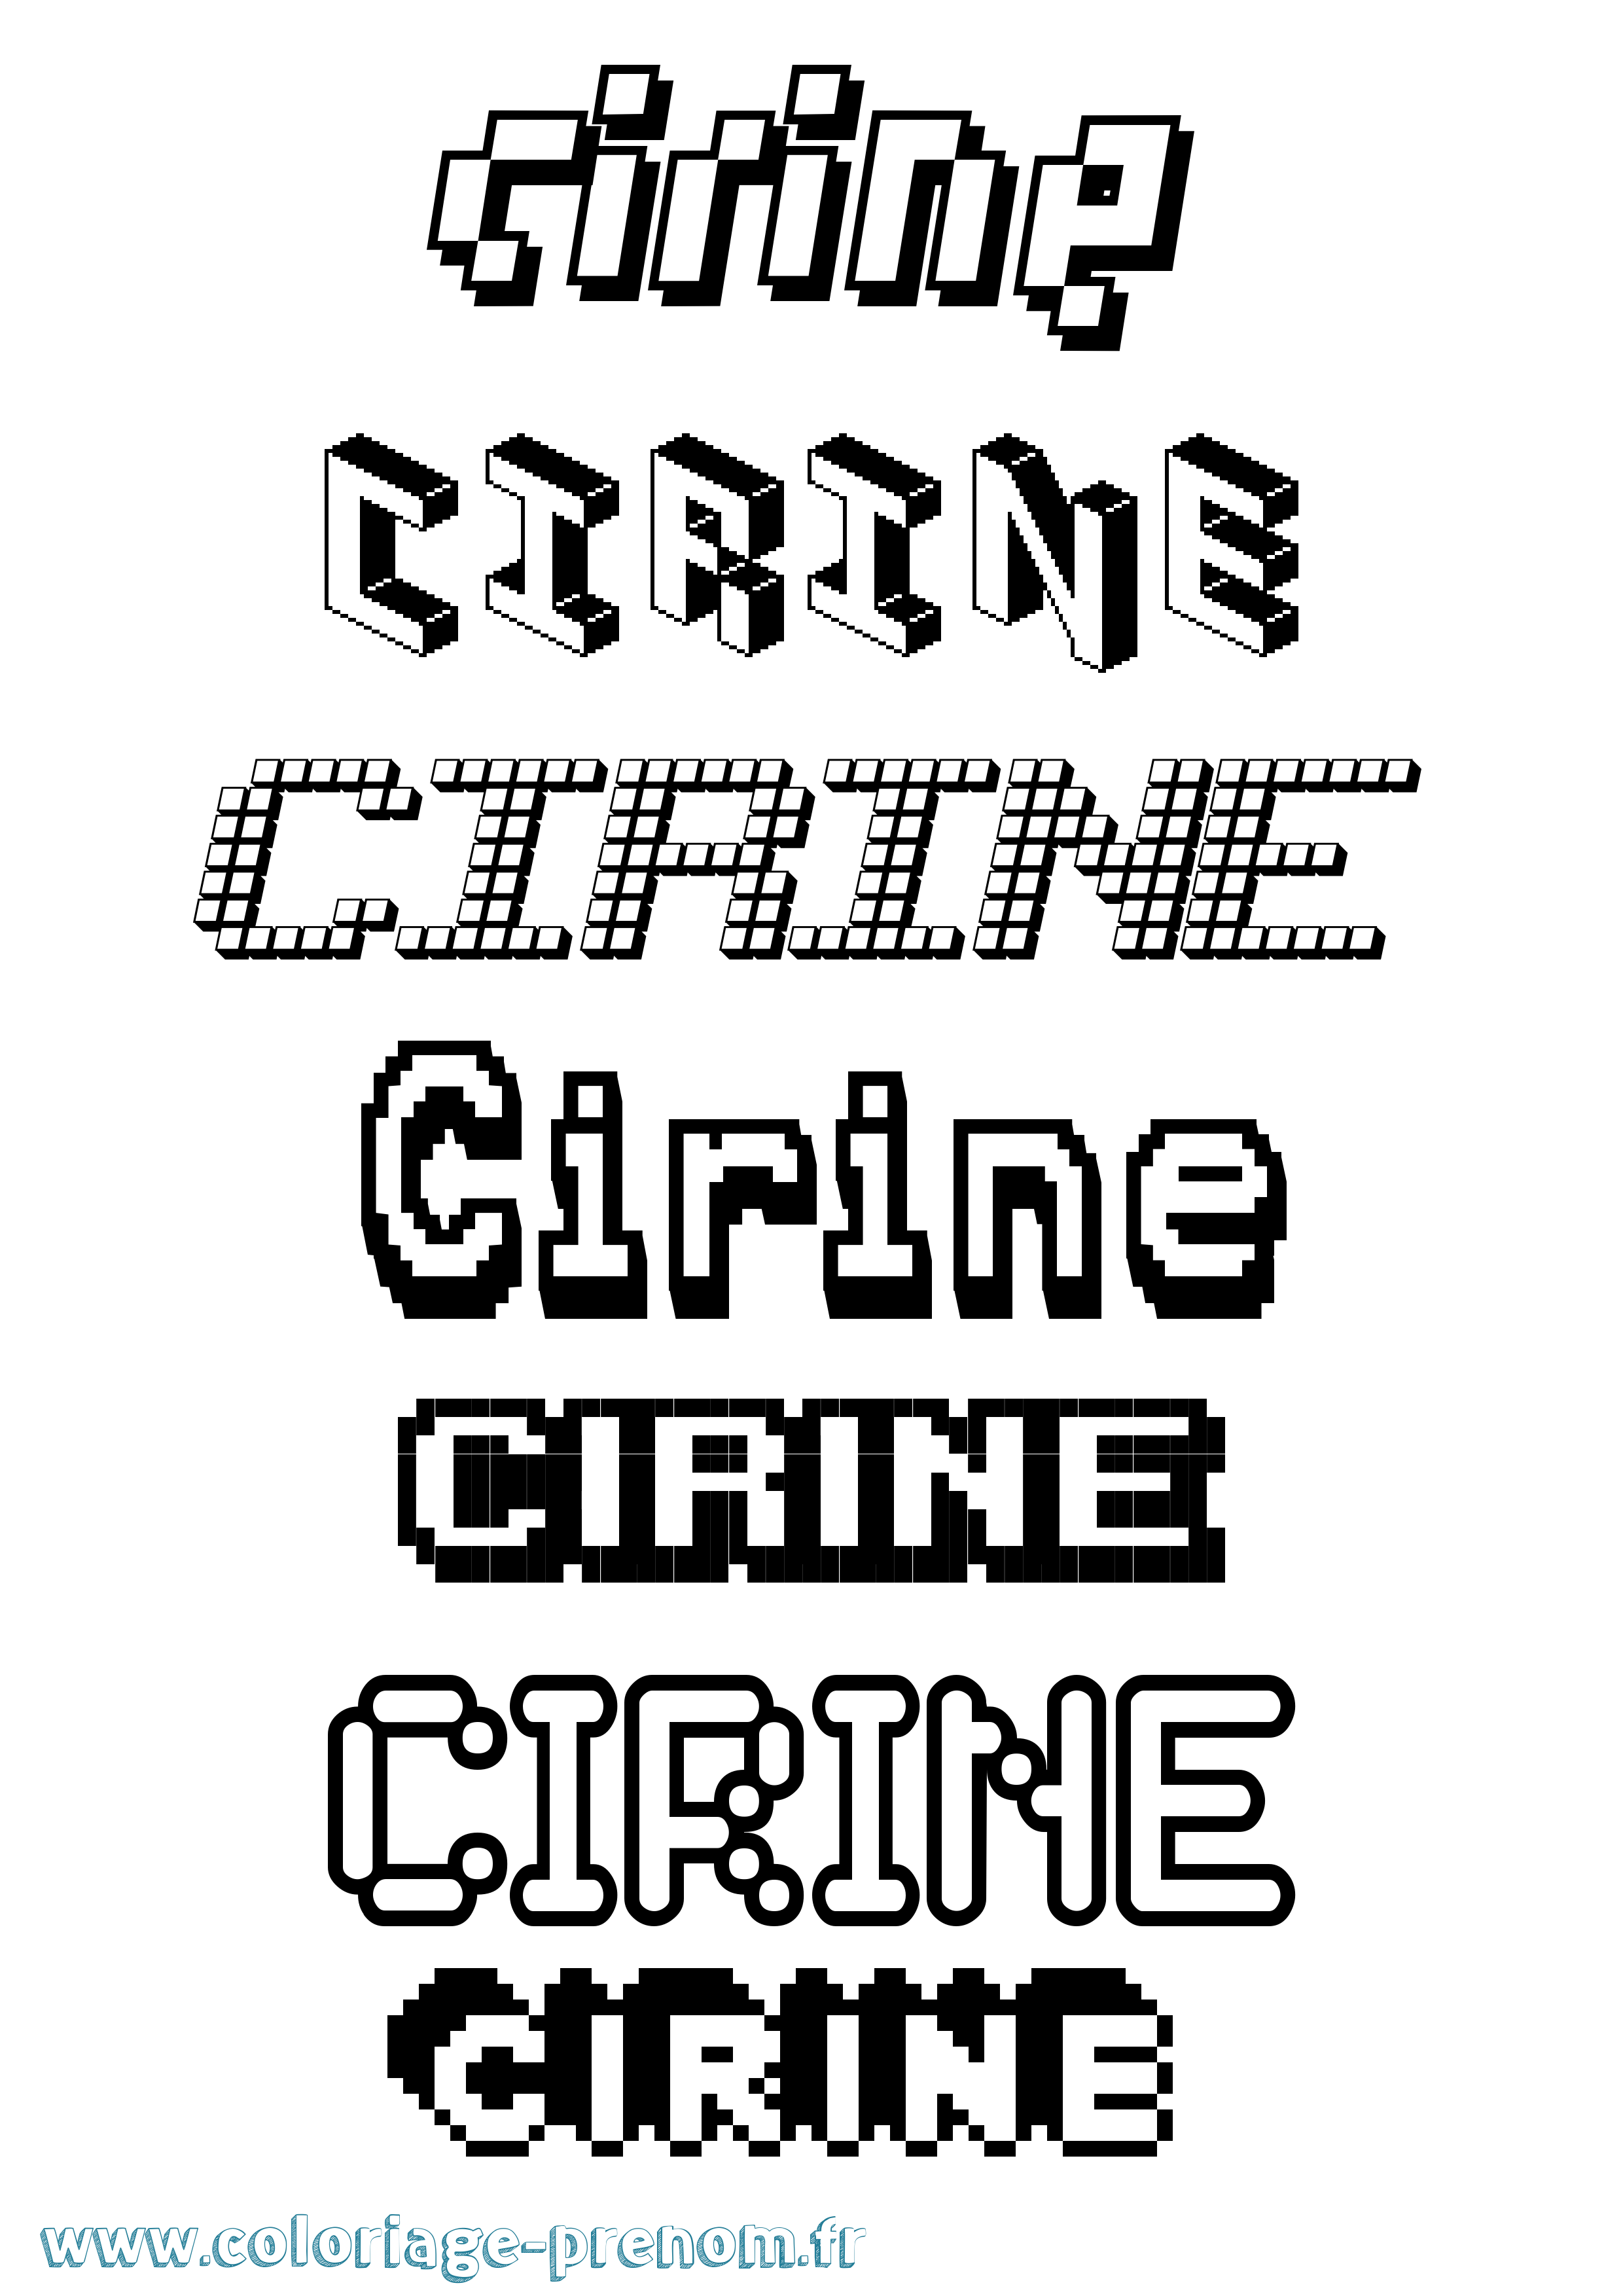 Coloriage prénom Cirine Pixel